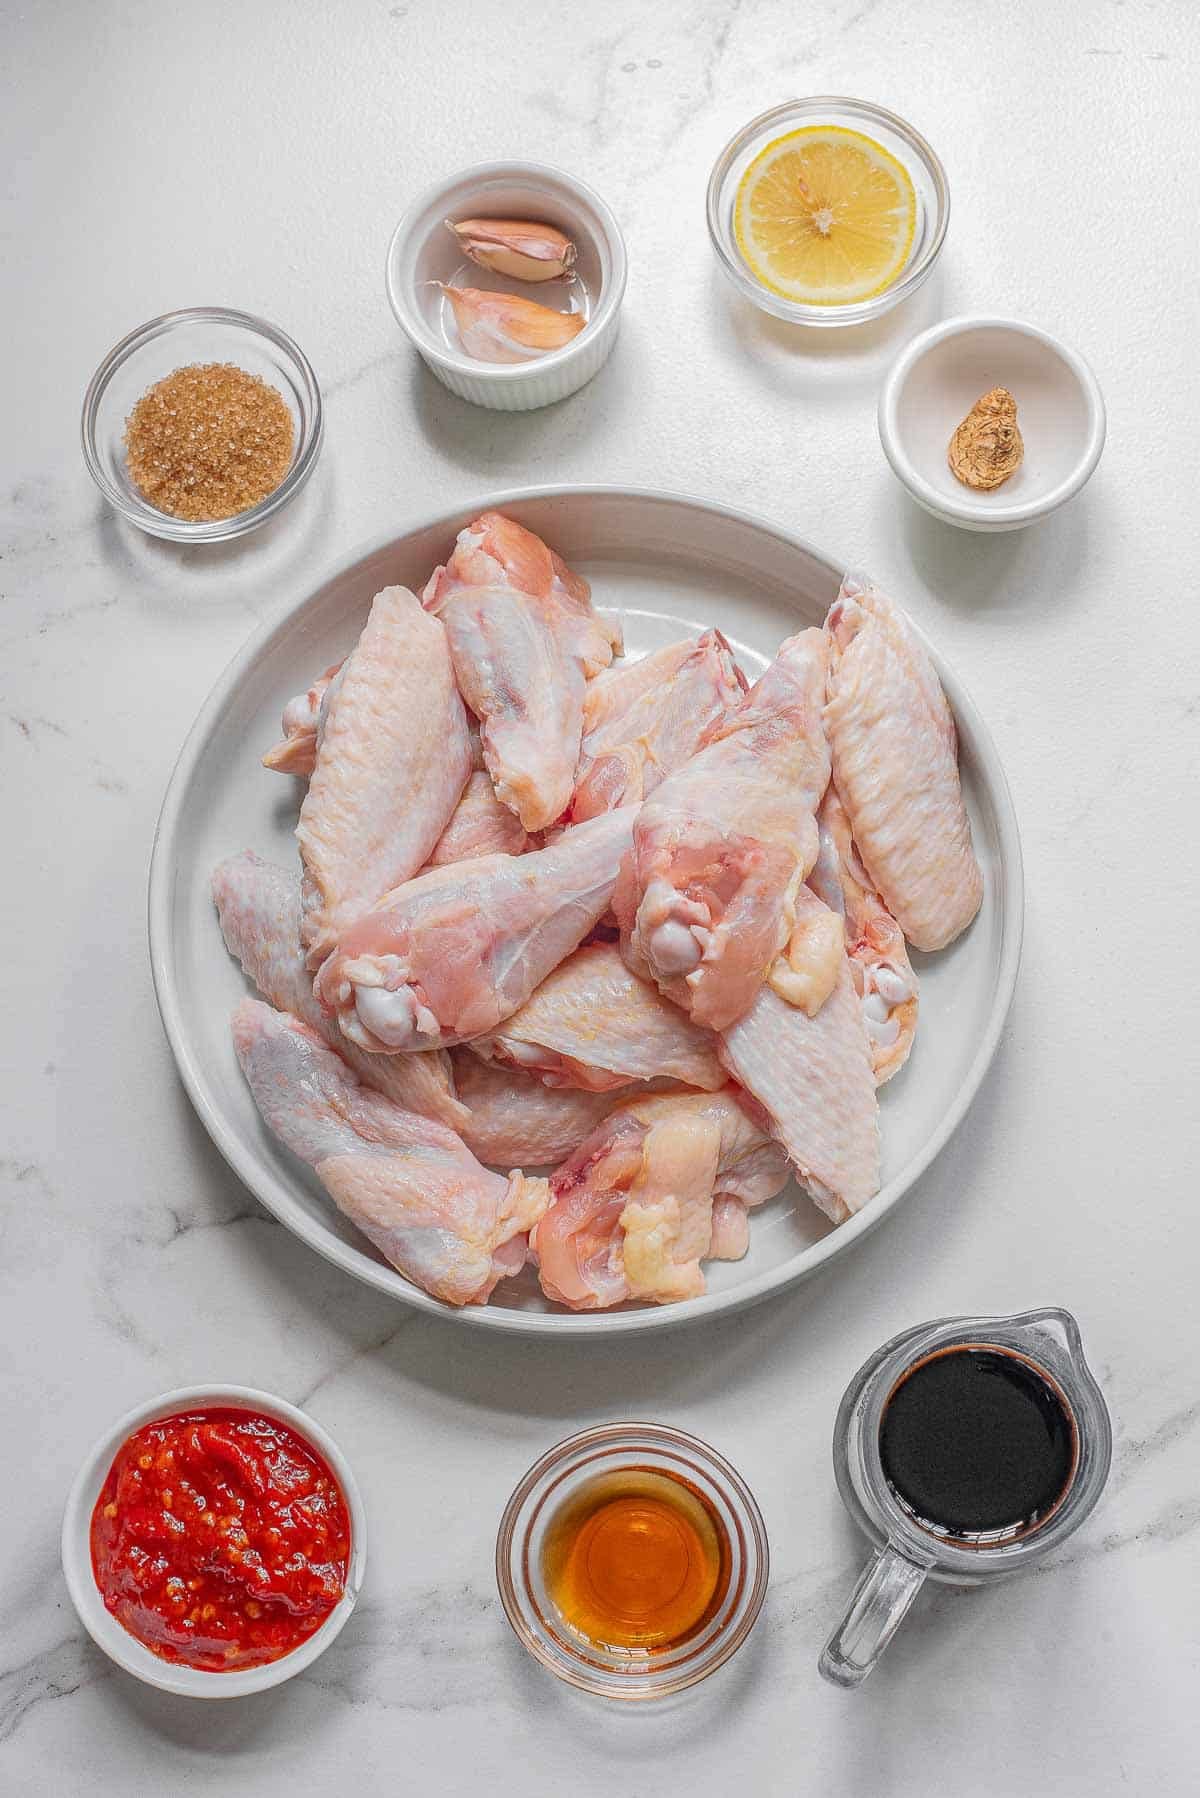 Ingredients for Thai chicken wings - Chicken wings, sesame oil, soy sauce, lemon juice, ginger, chili paste, garlic and brown sugar.